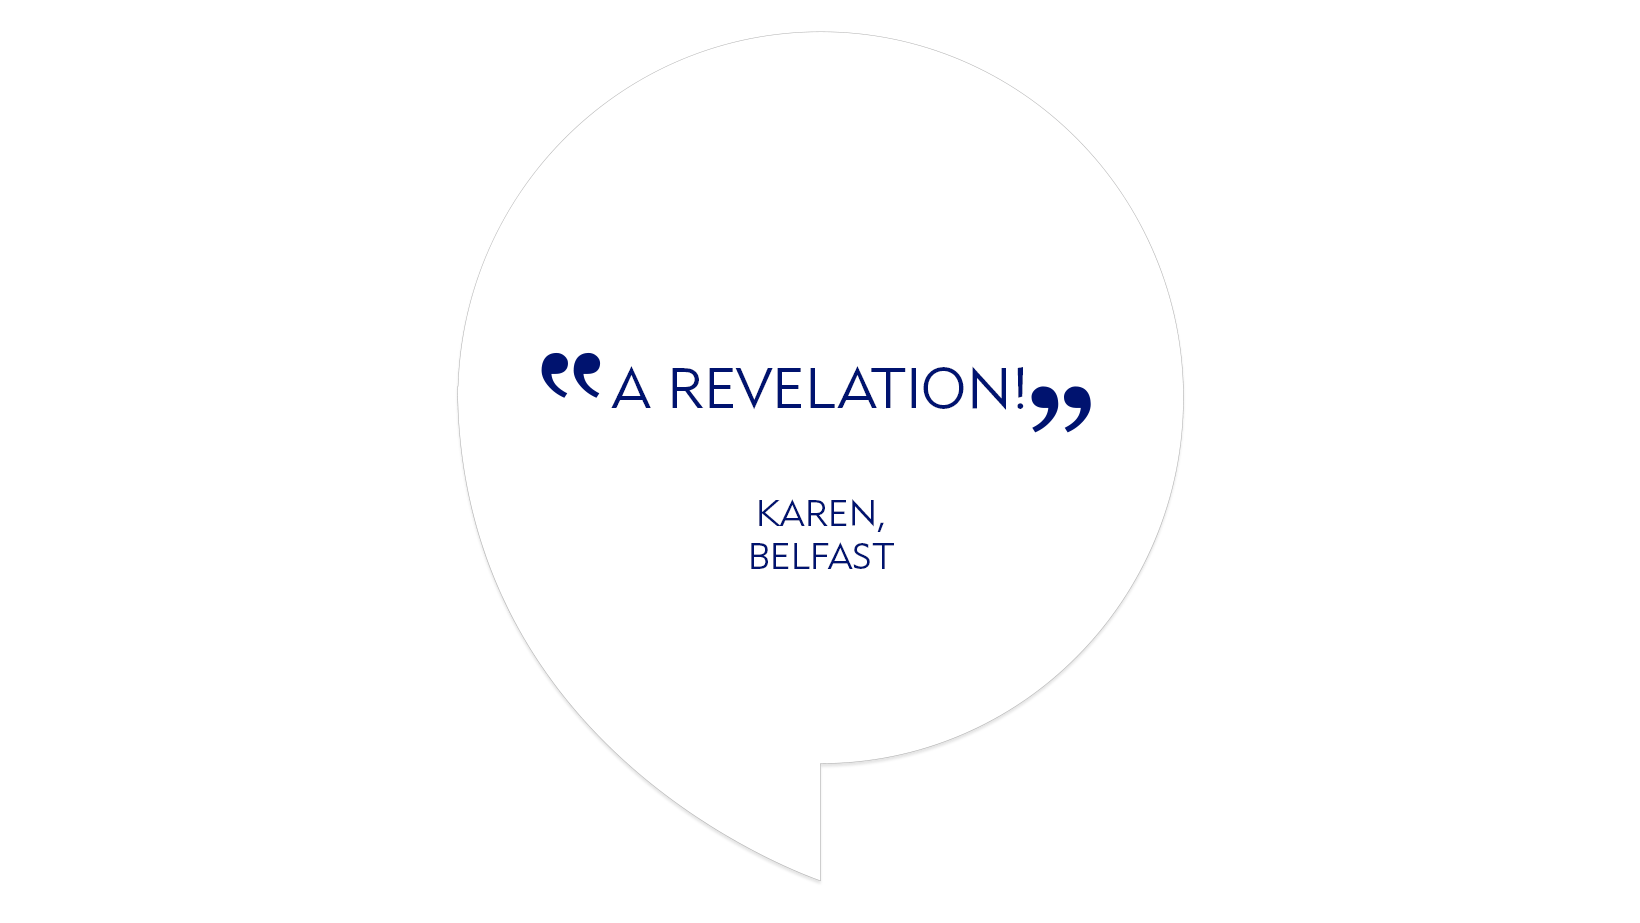 Testimonial quote "A revelation!"